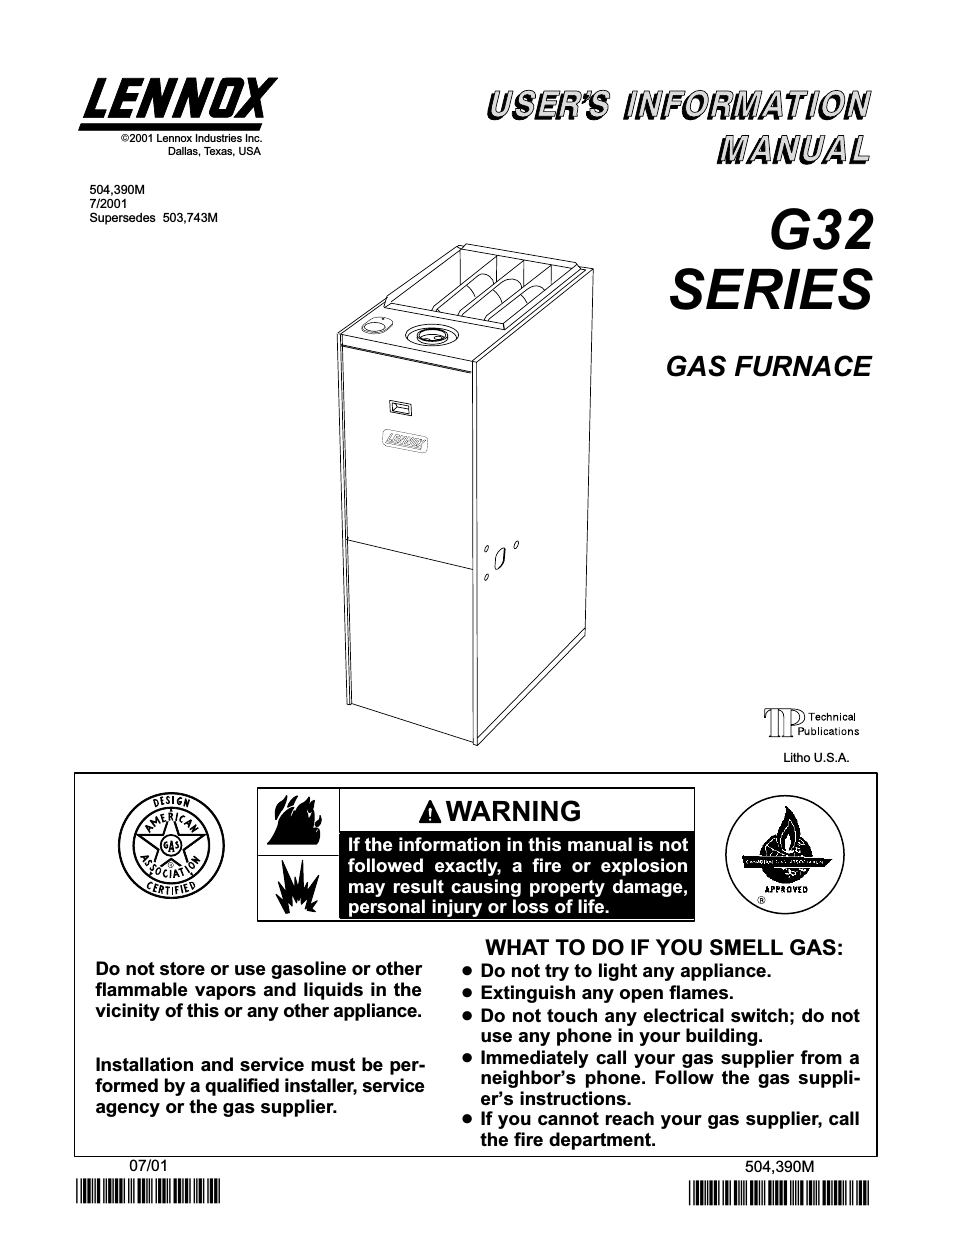 G32 SERIES